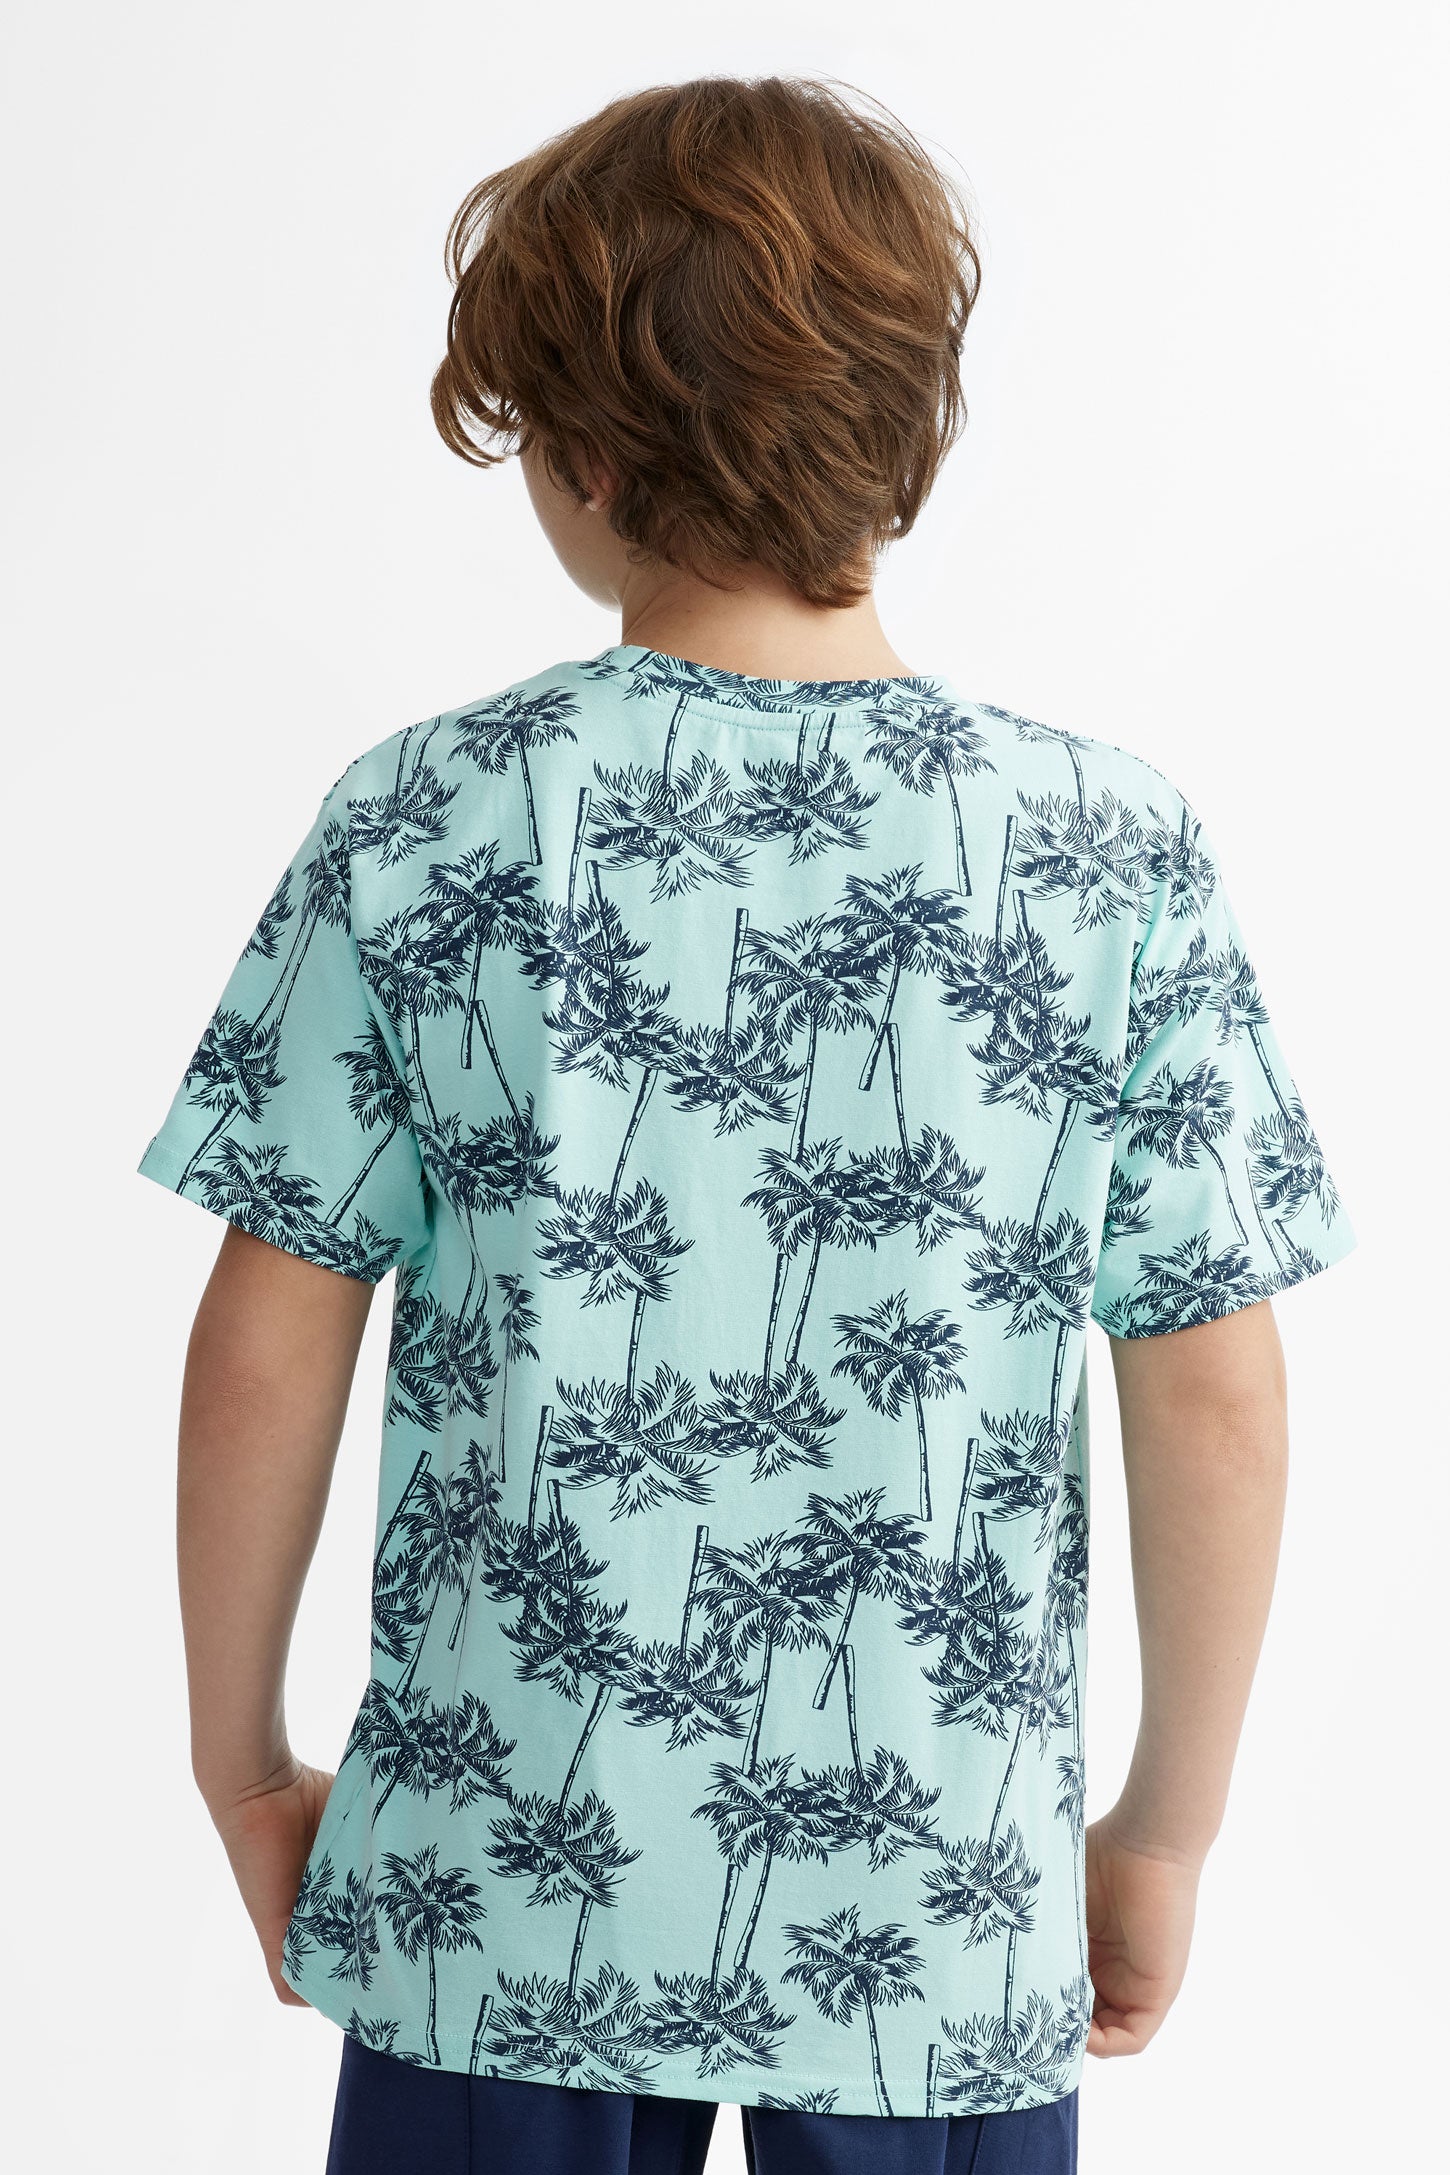 T-shirt imprimé en coton, 2/25$ - Ado garçon && MENTHE/MULTI